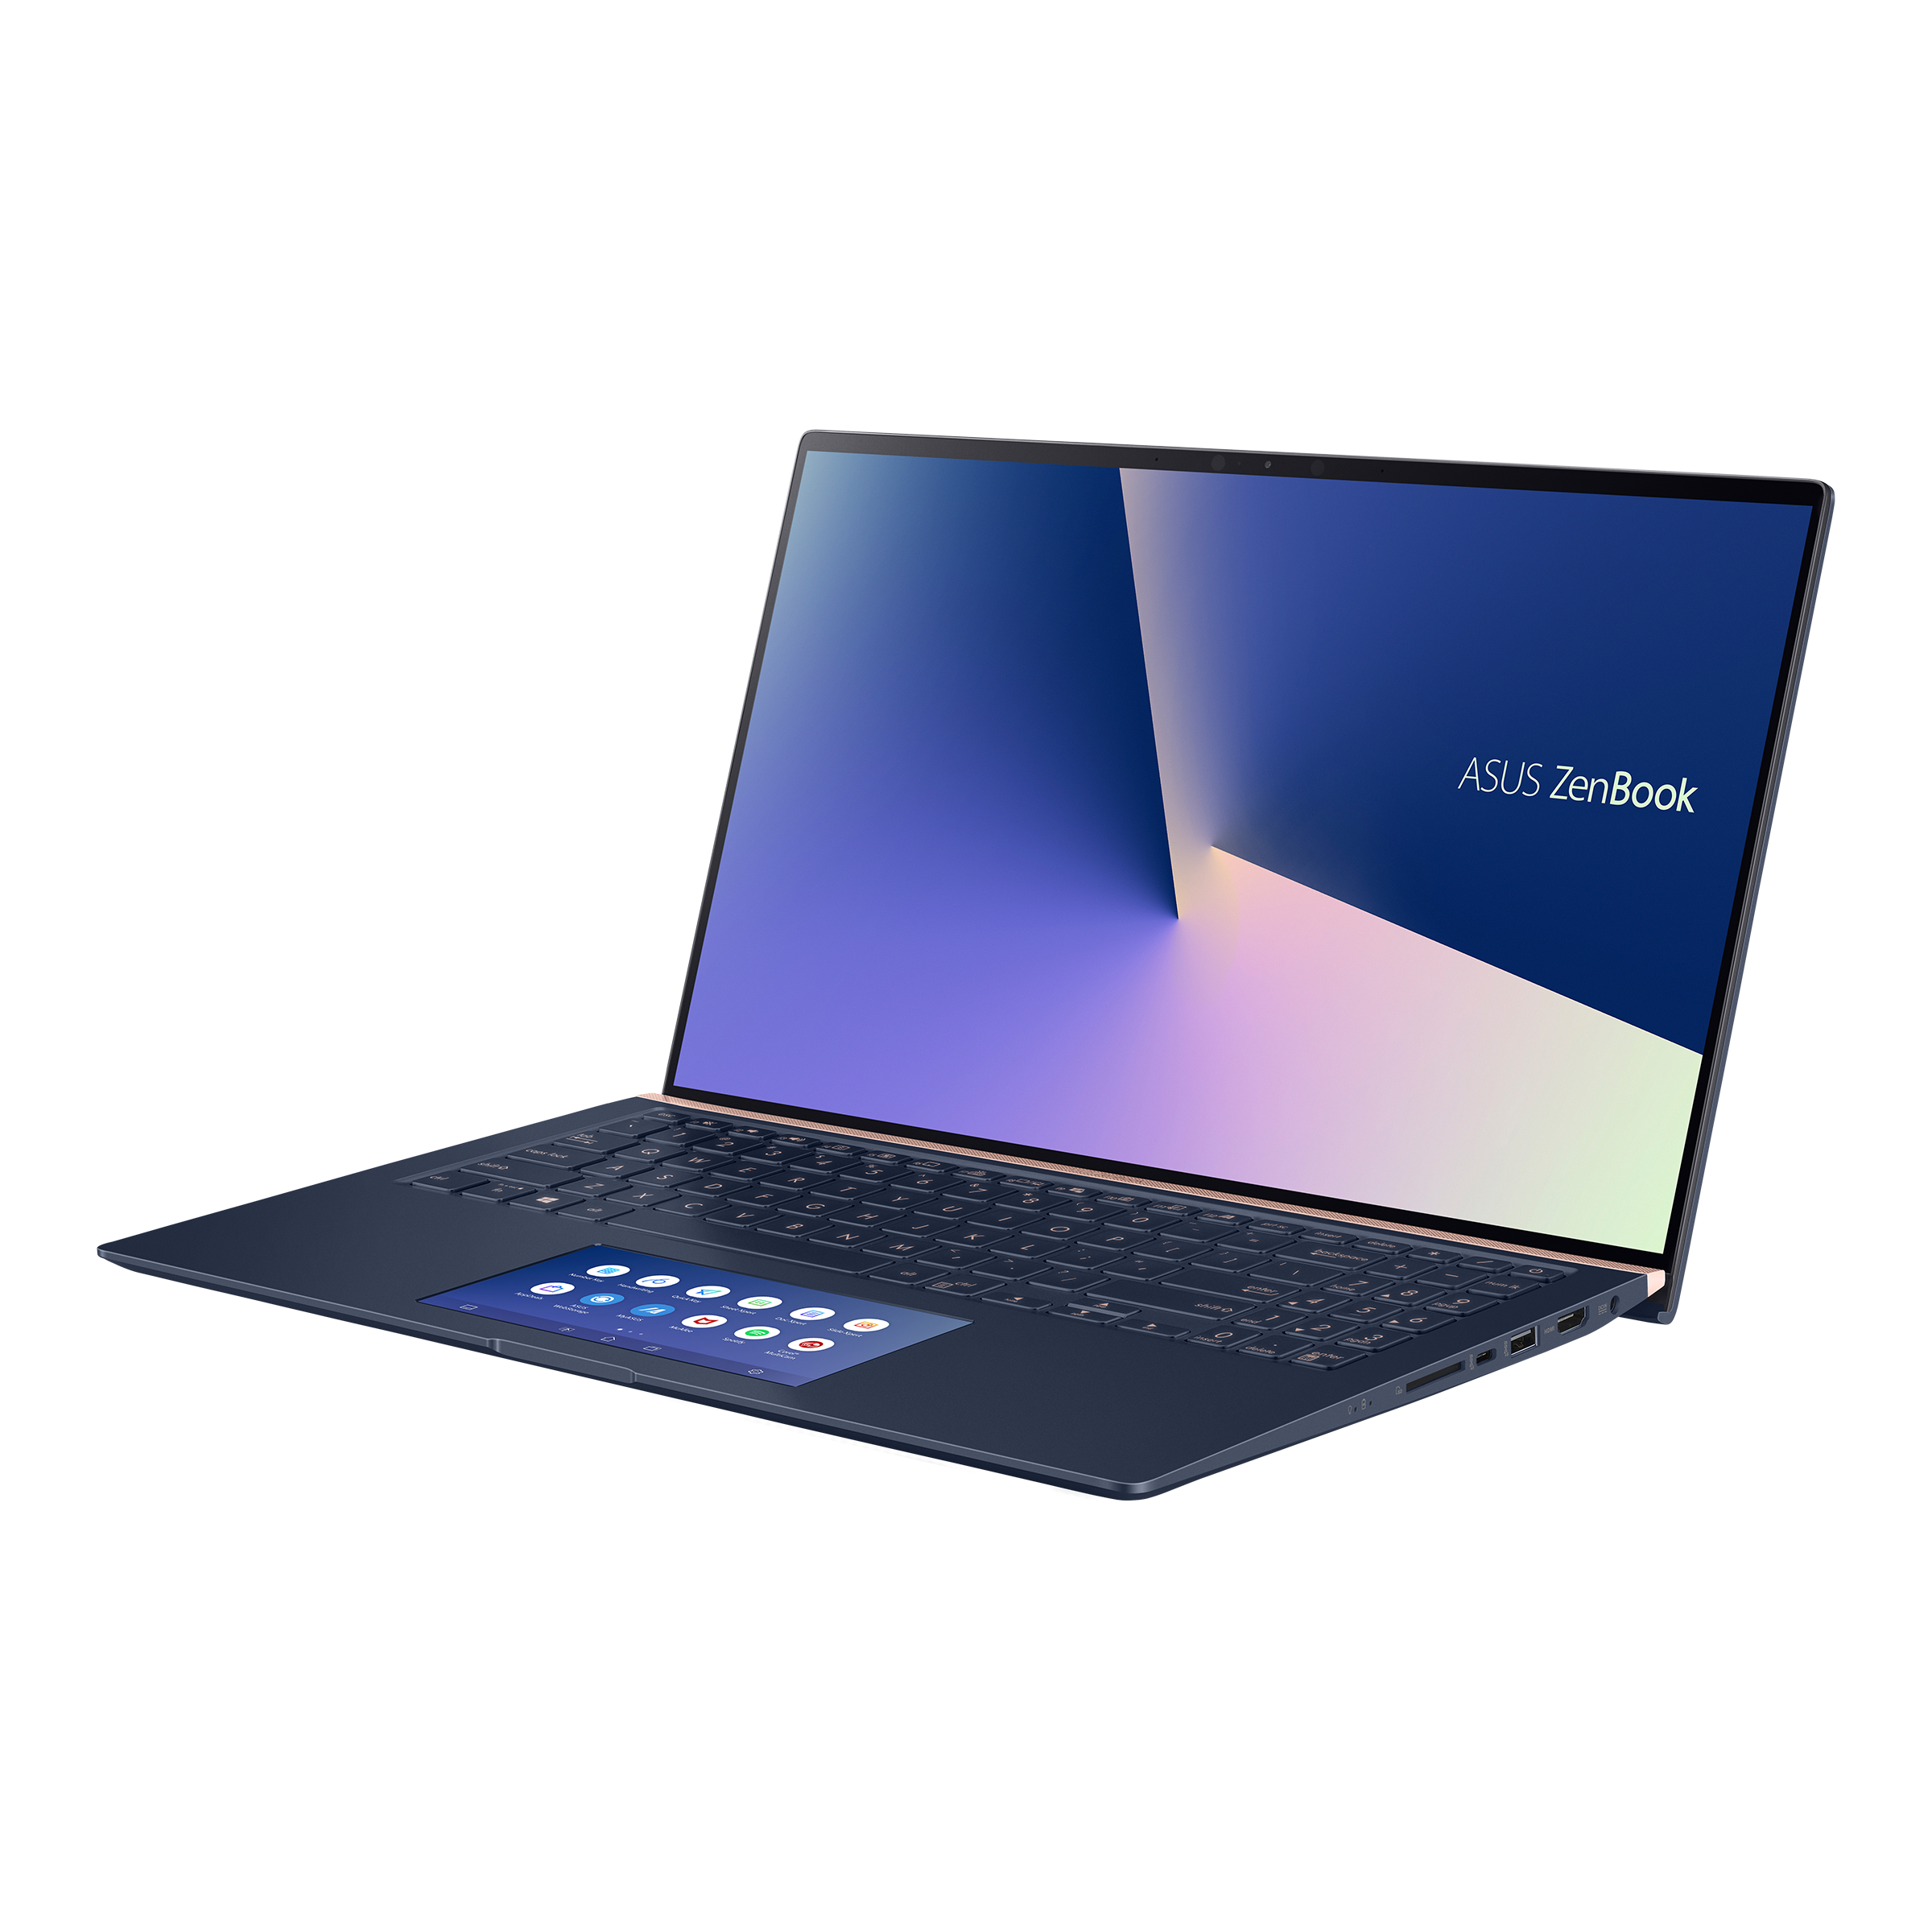 Zenbook 15 UX534｜Laptops For Home｜ASUS Global